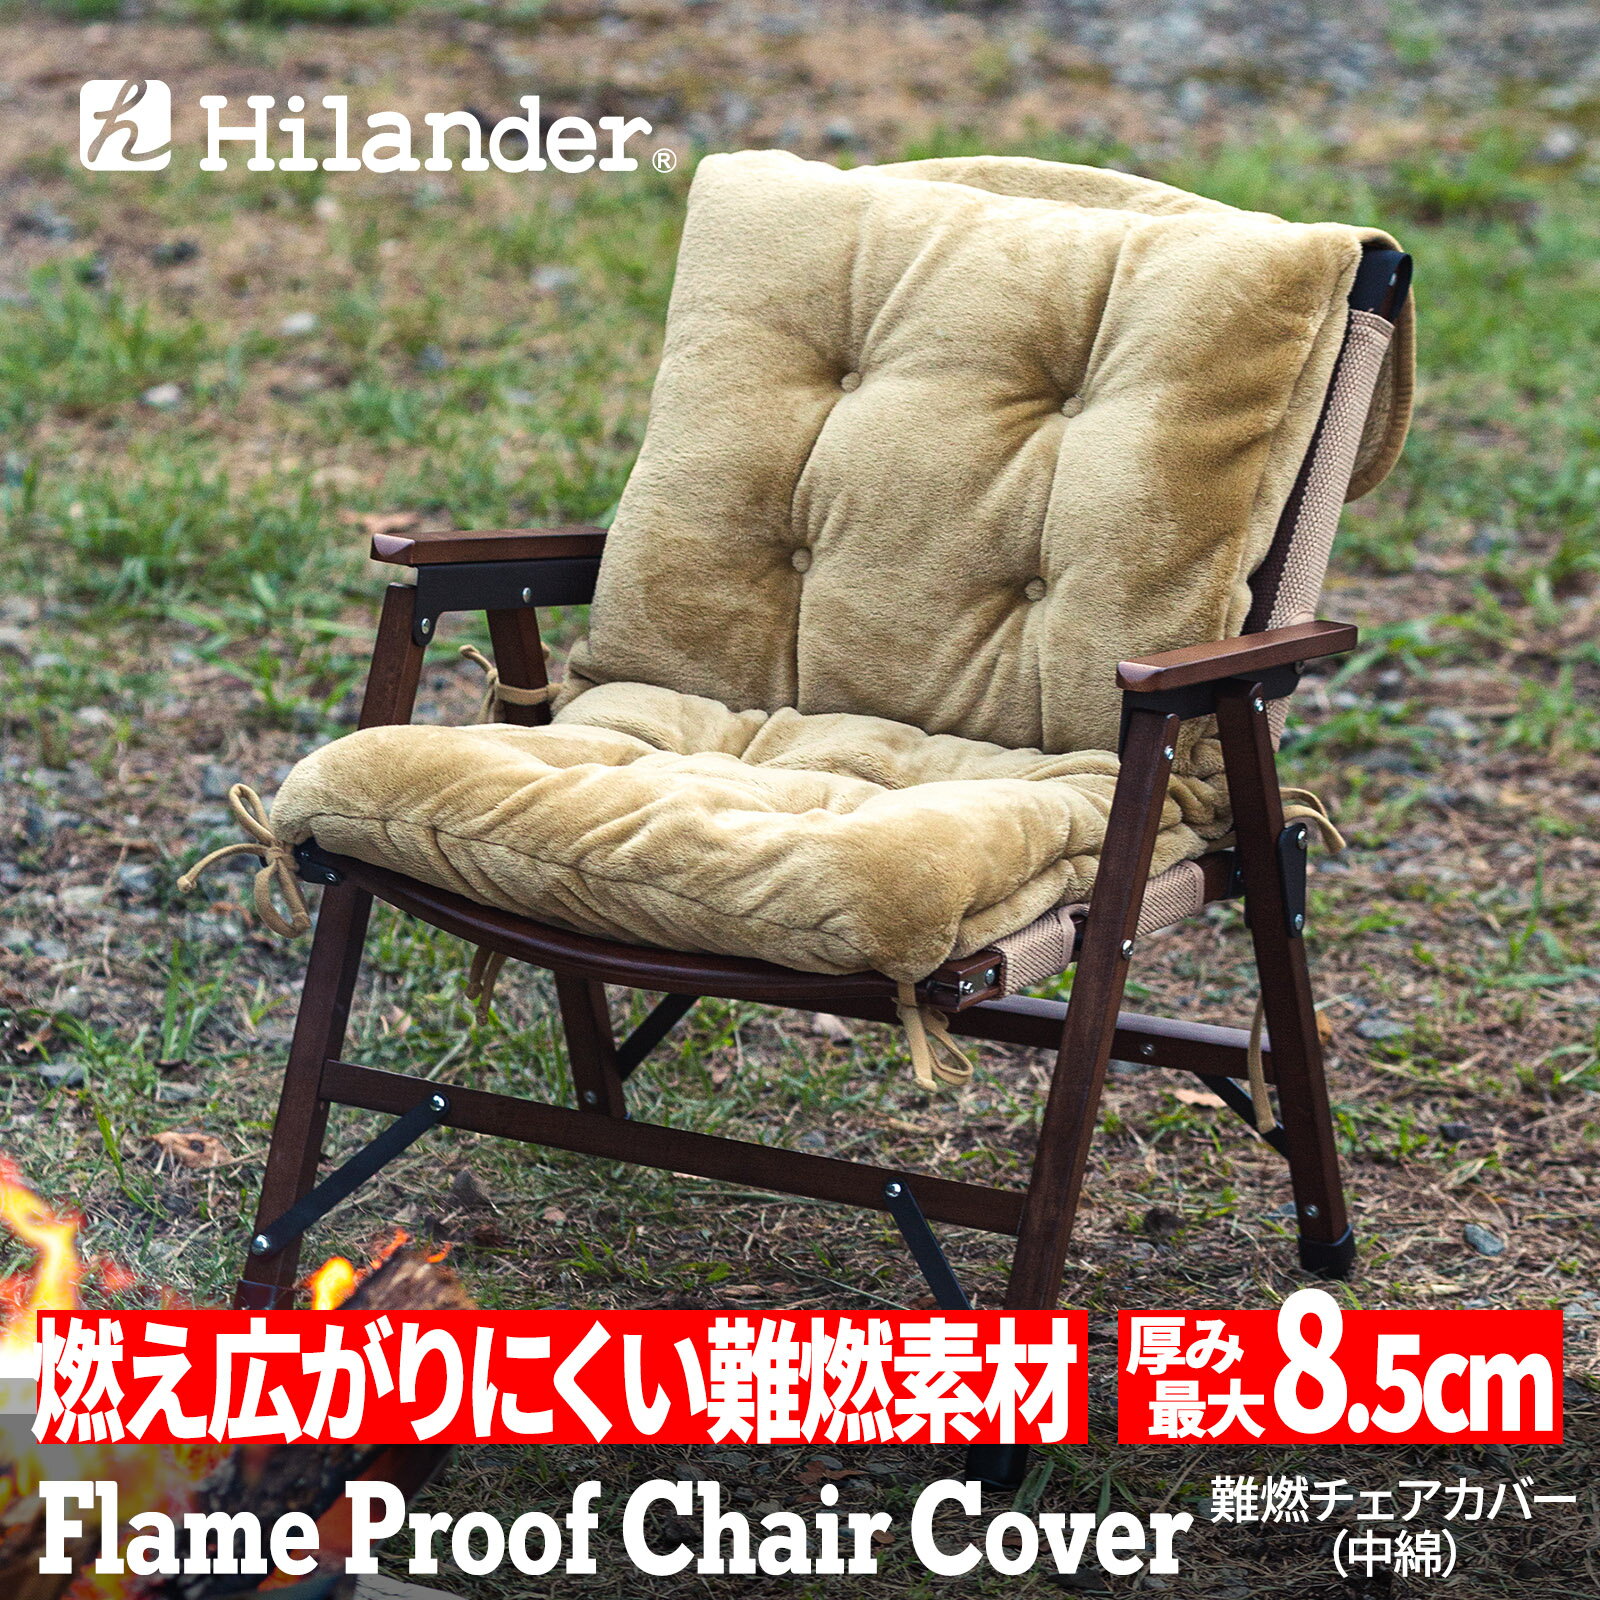 Hilander(ハイランダー) 難燃チェアカバー 【1年保証】 カーキ N-085